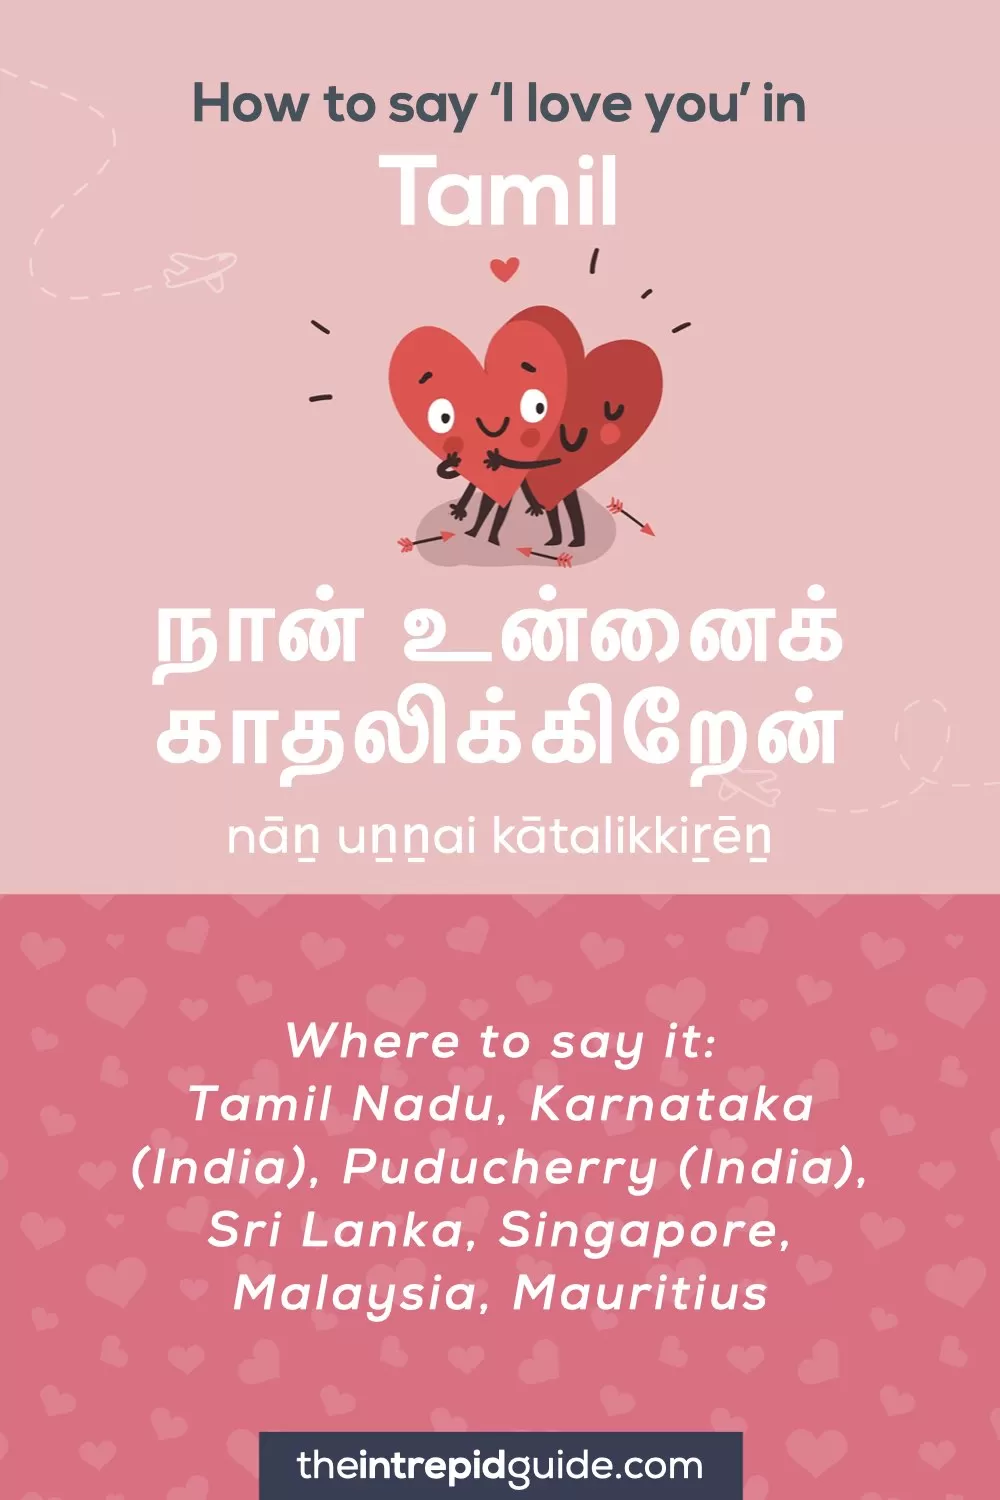 How to say I love you in different languages - Tamil - நான் உன்னைக் காதலிக்கிறேன்